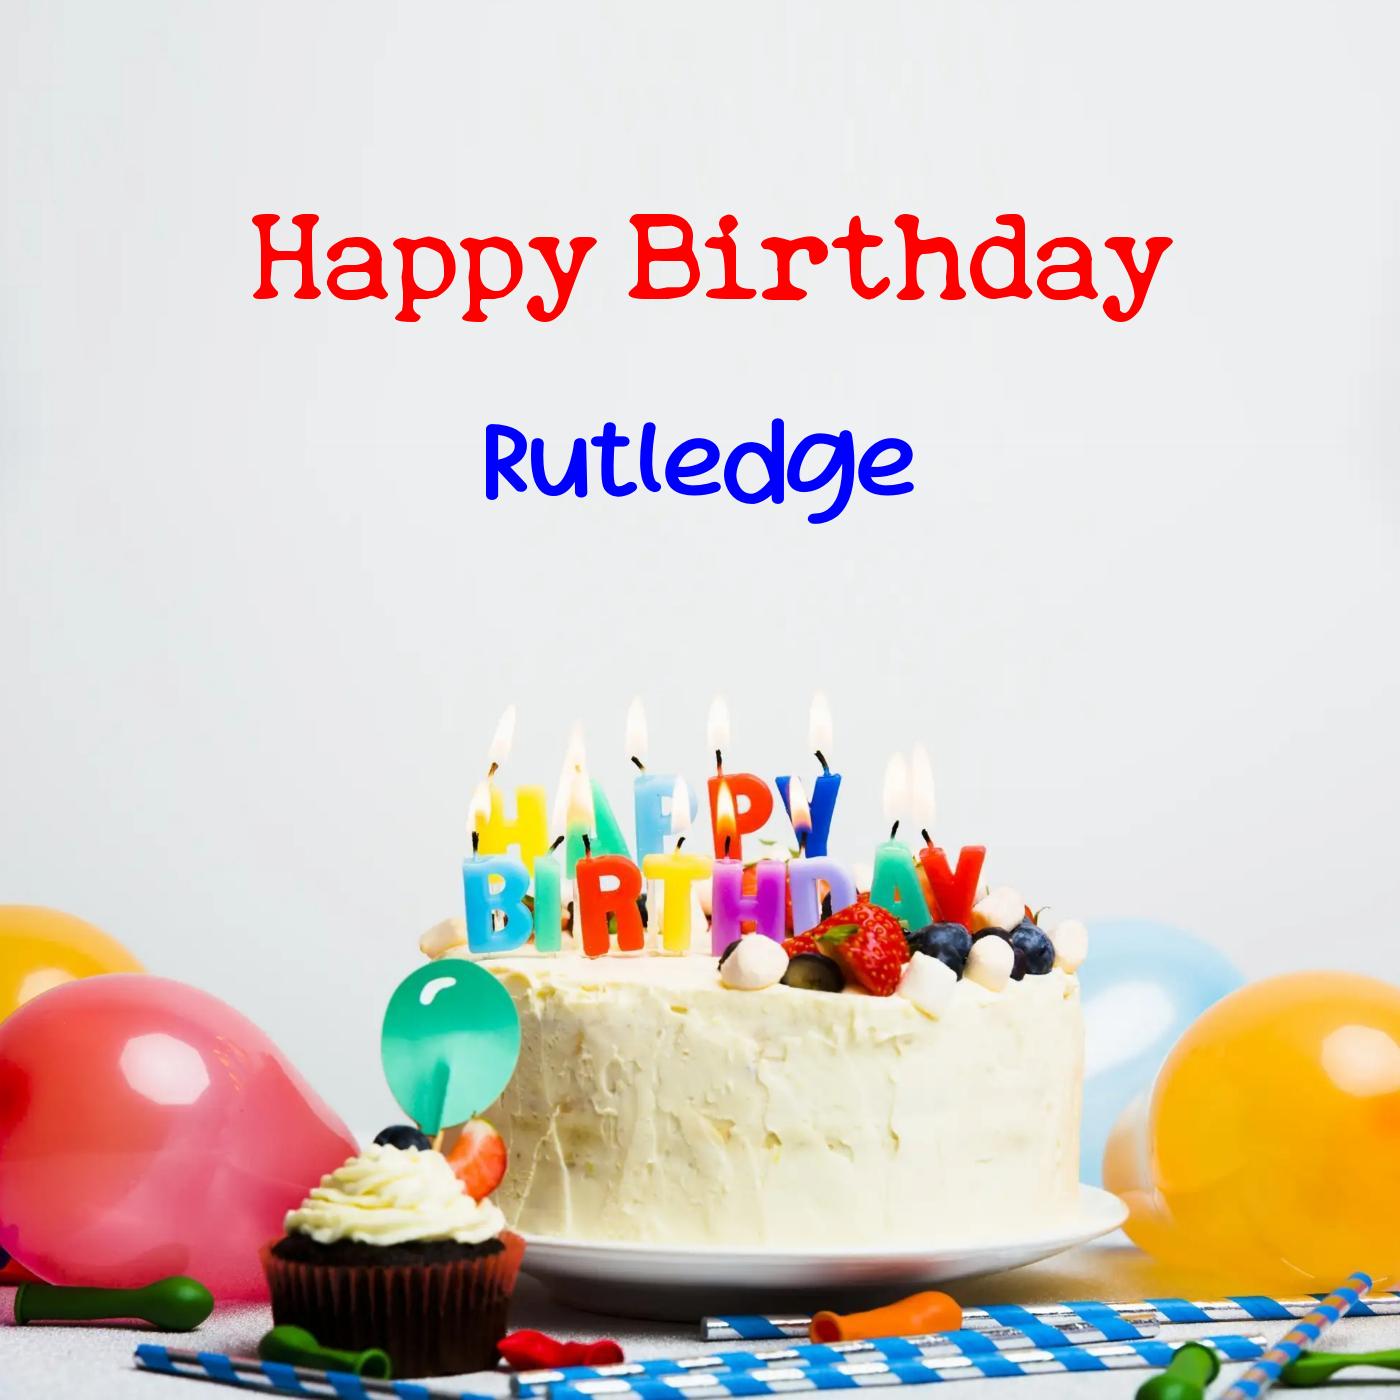 Happy Birthday Rutledge Cake Balloons Card